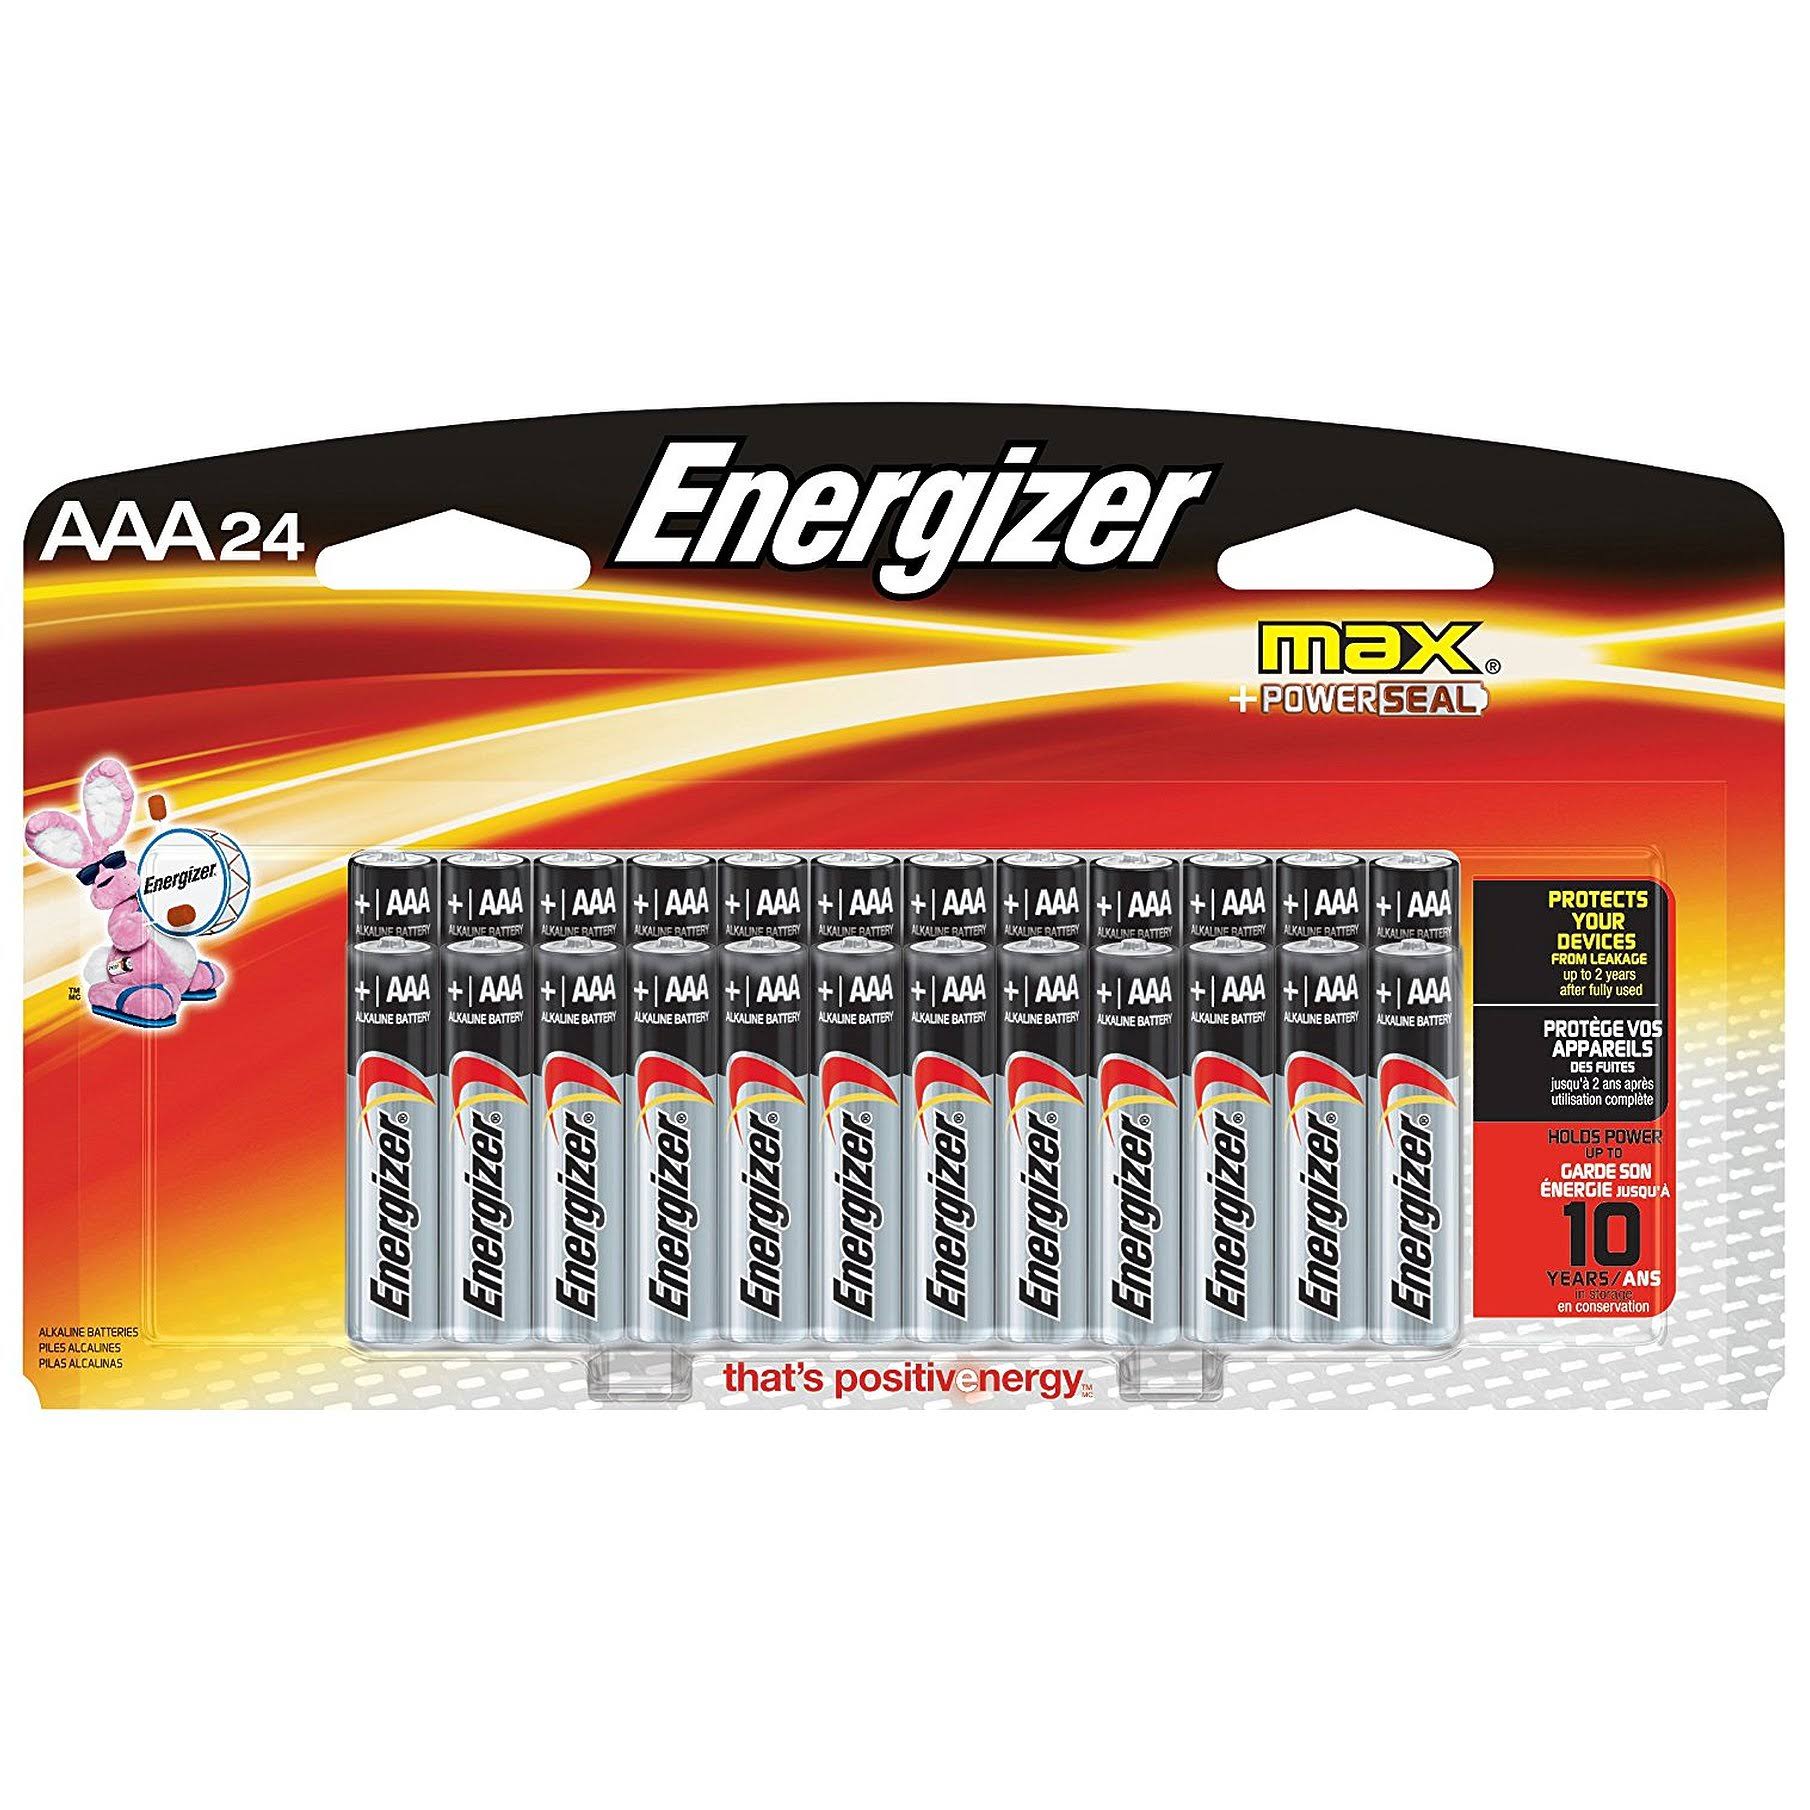 Energizer Max AAA Alkaline Batteries - 1.5V, 24pk